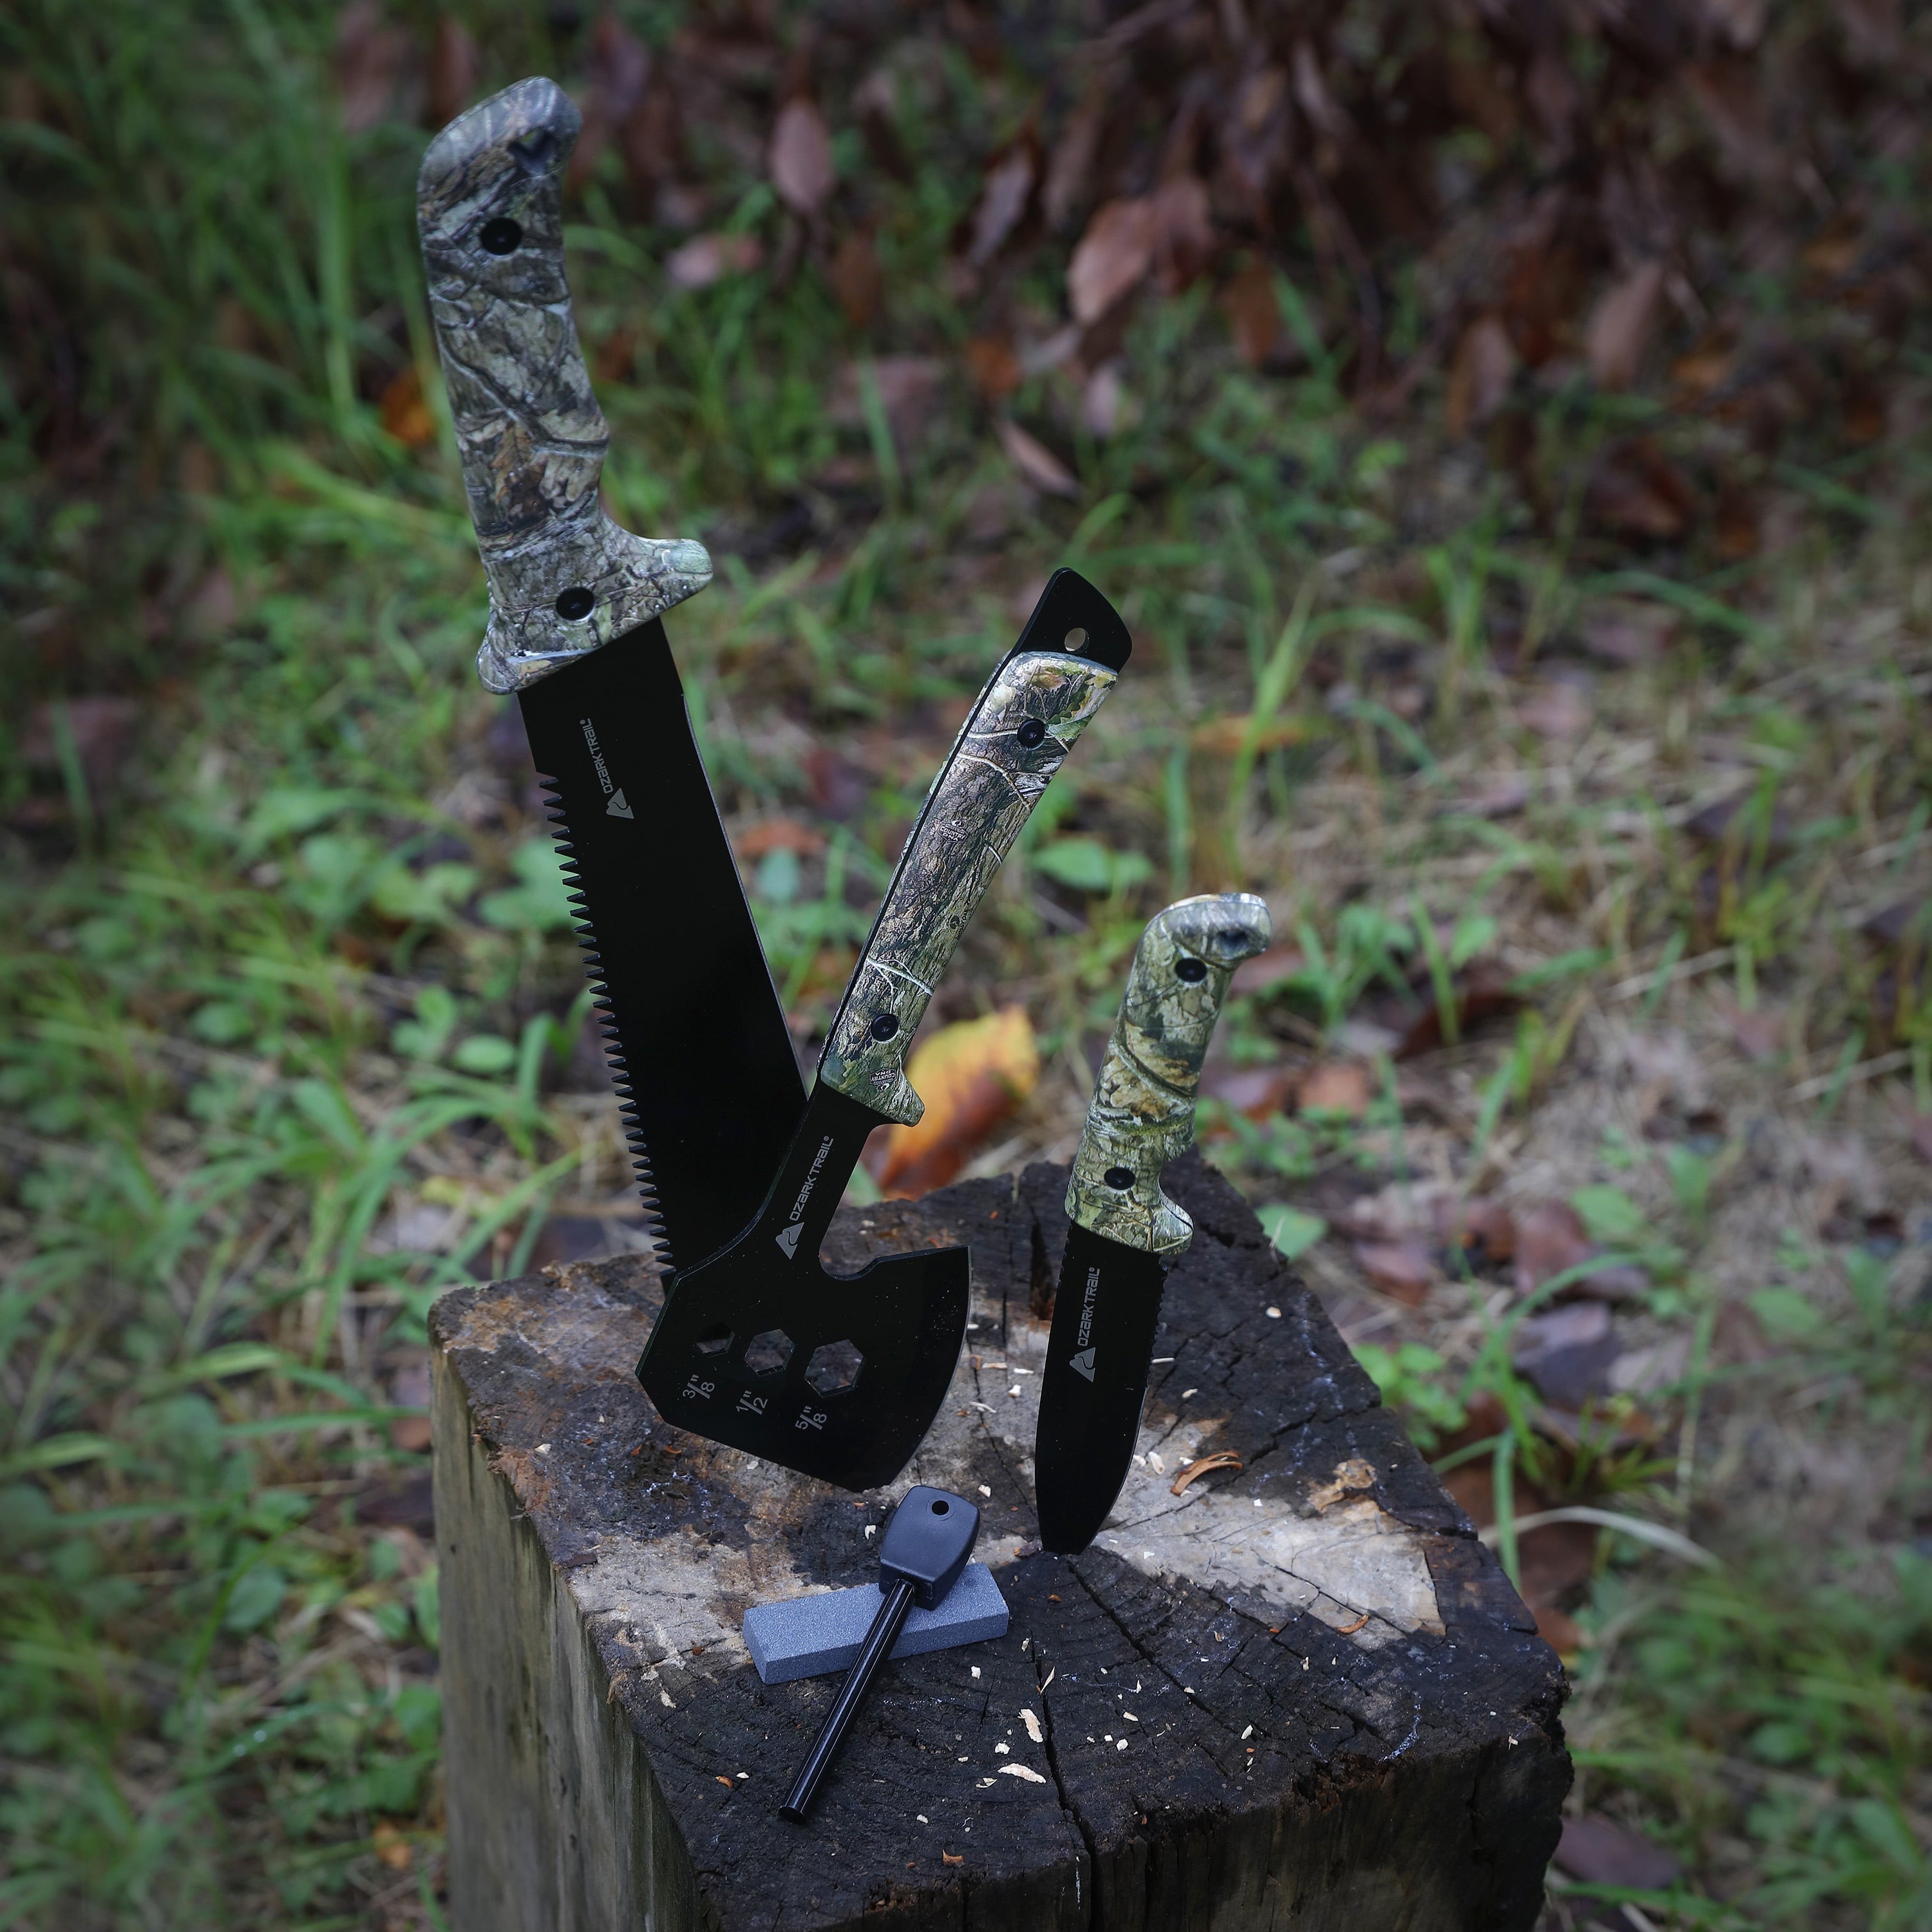 Ozark Trail Fixed Knife with Protective Sheath, 3 Blade, Black